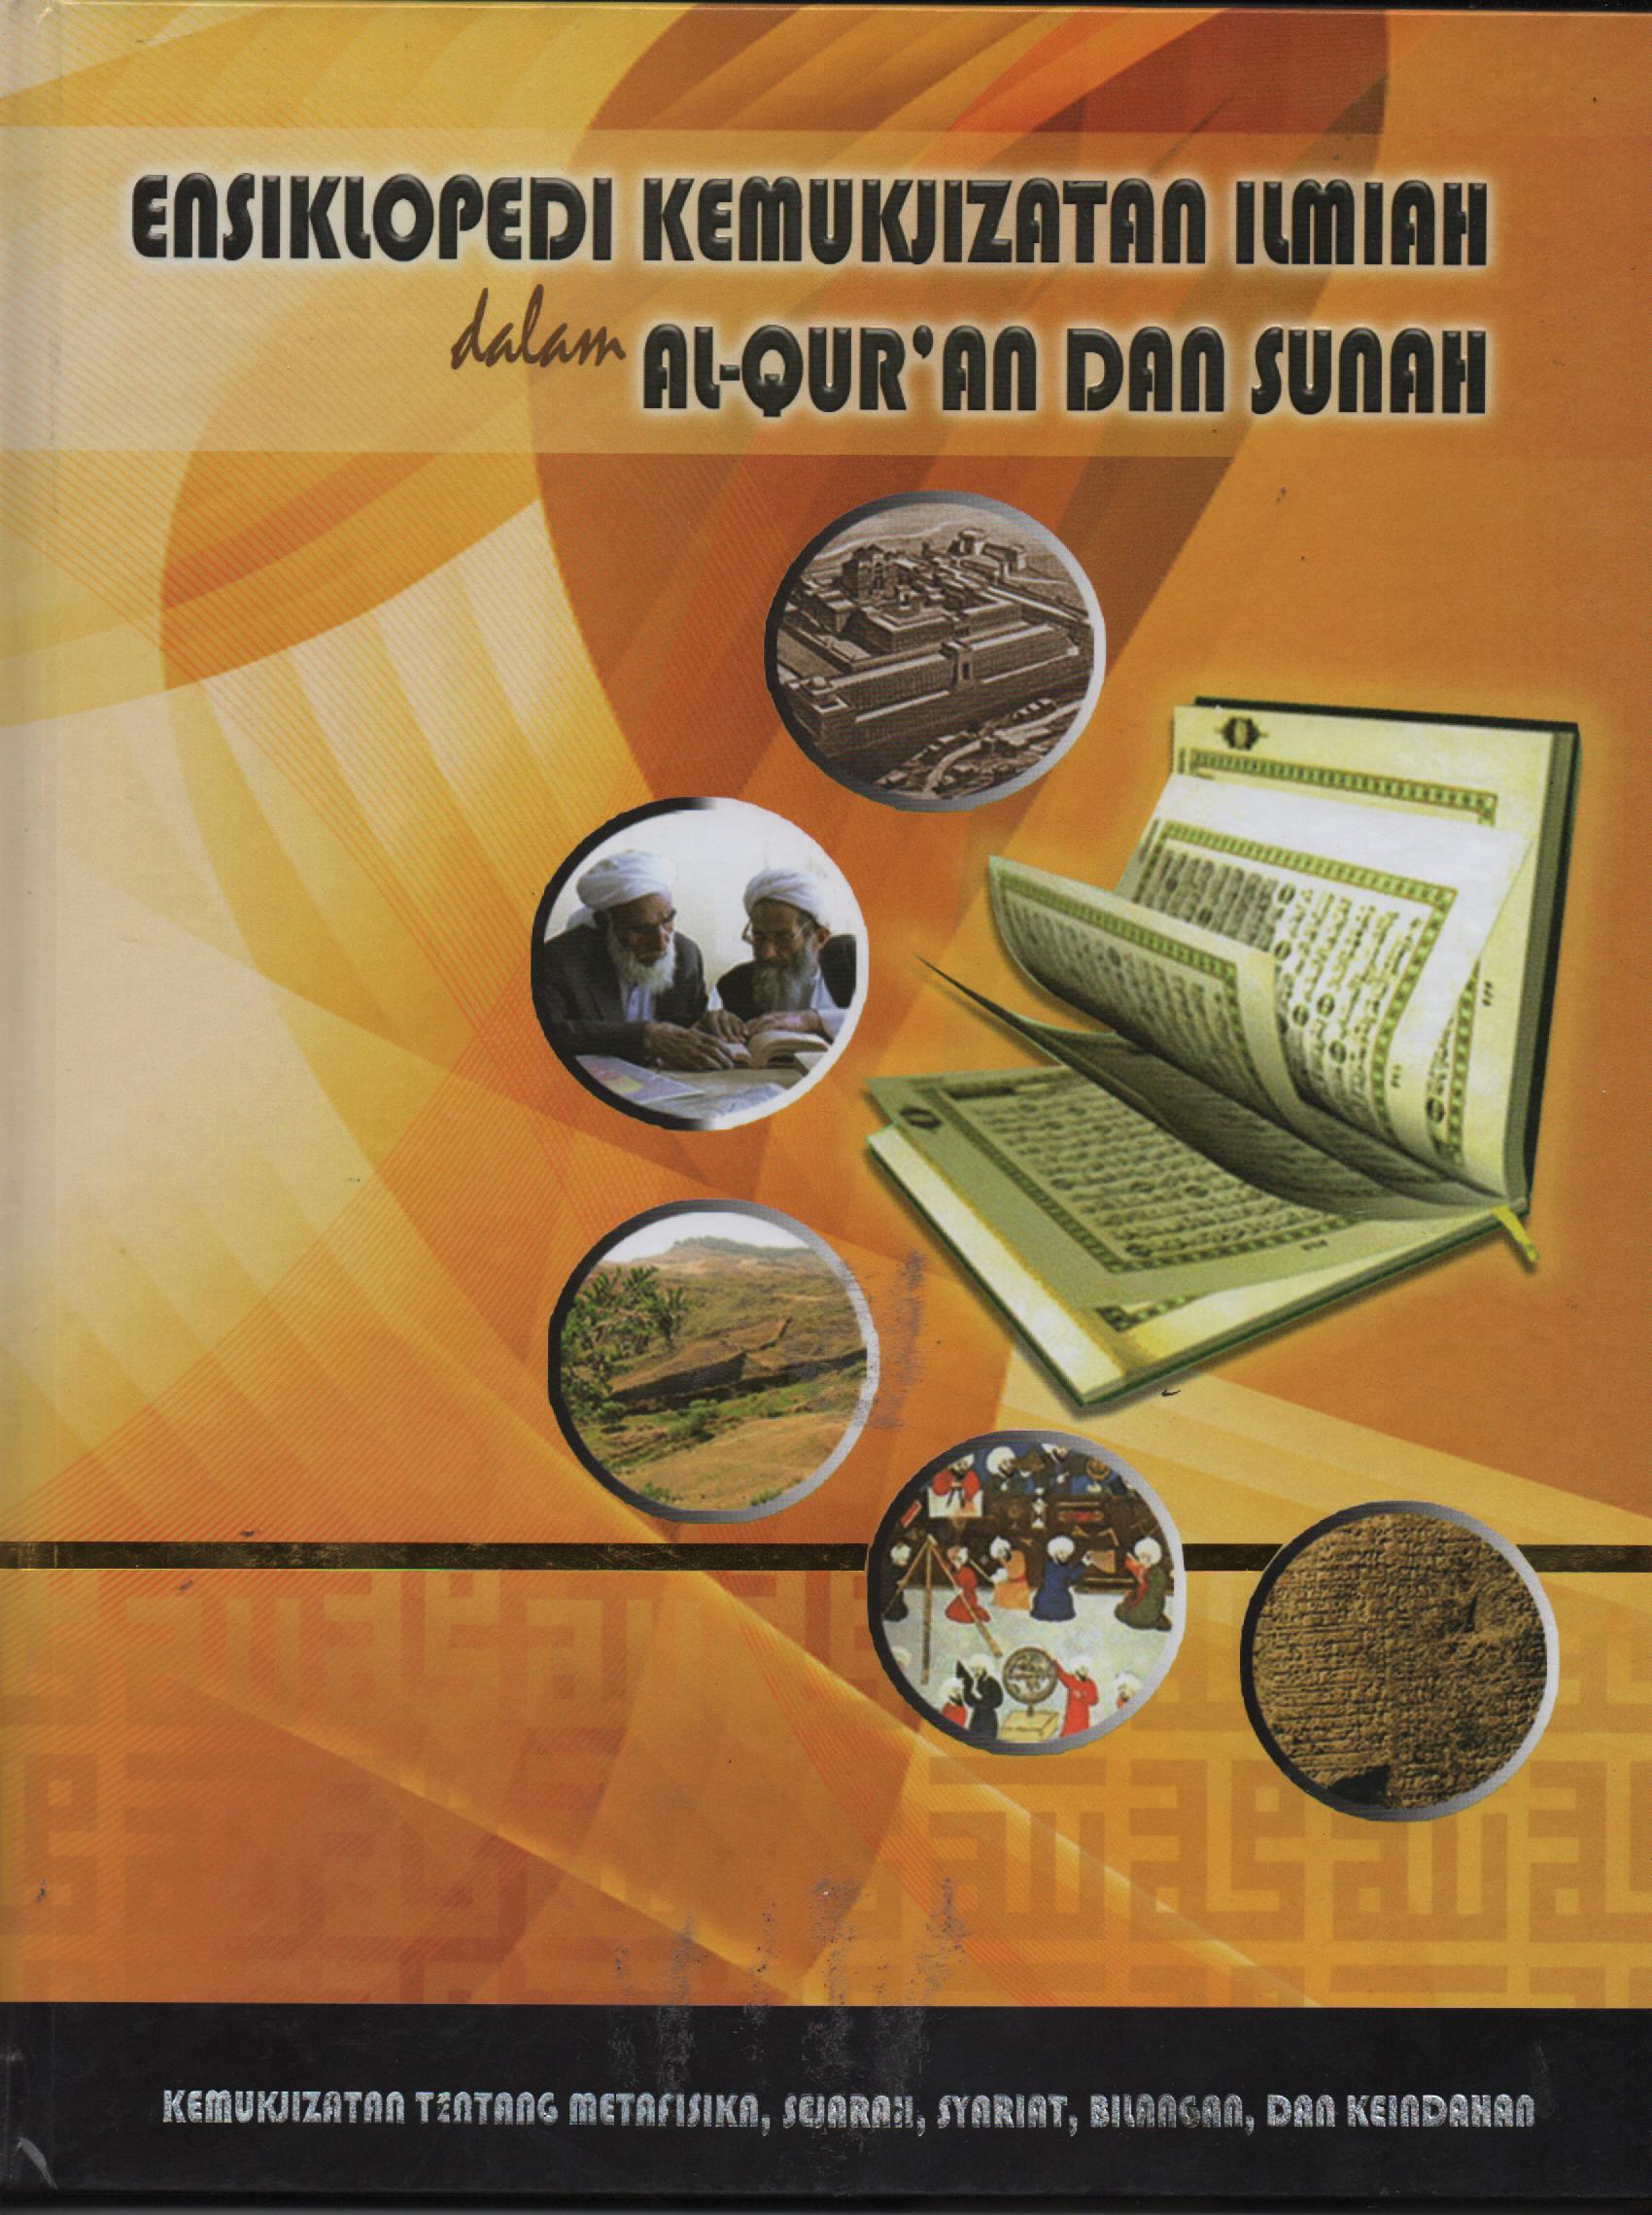 Ensiklopedi Kemukjizatan Ilmiah Dalam Al-Qur'an dan Sunah Jilid 1 :  Kemukjizatan tentang Metafisika, Syariat, Bilangan, dan Keindahan